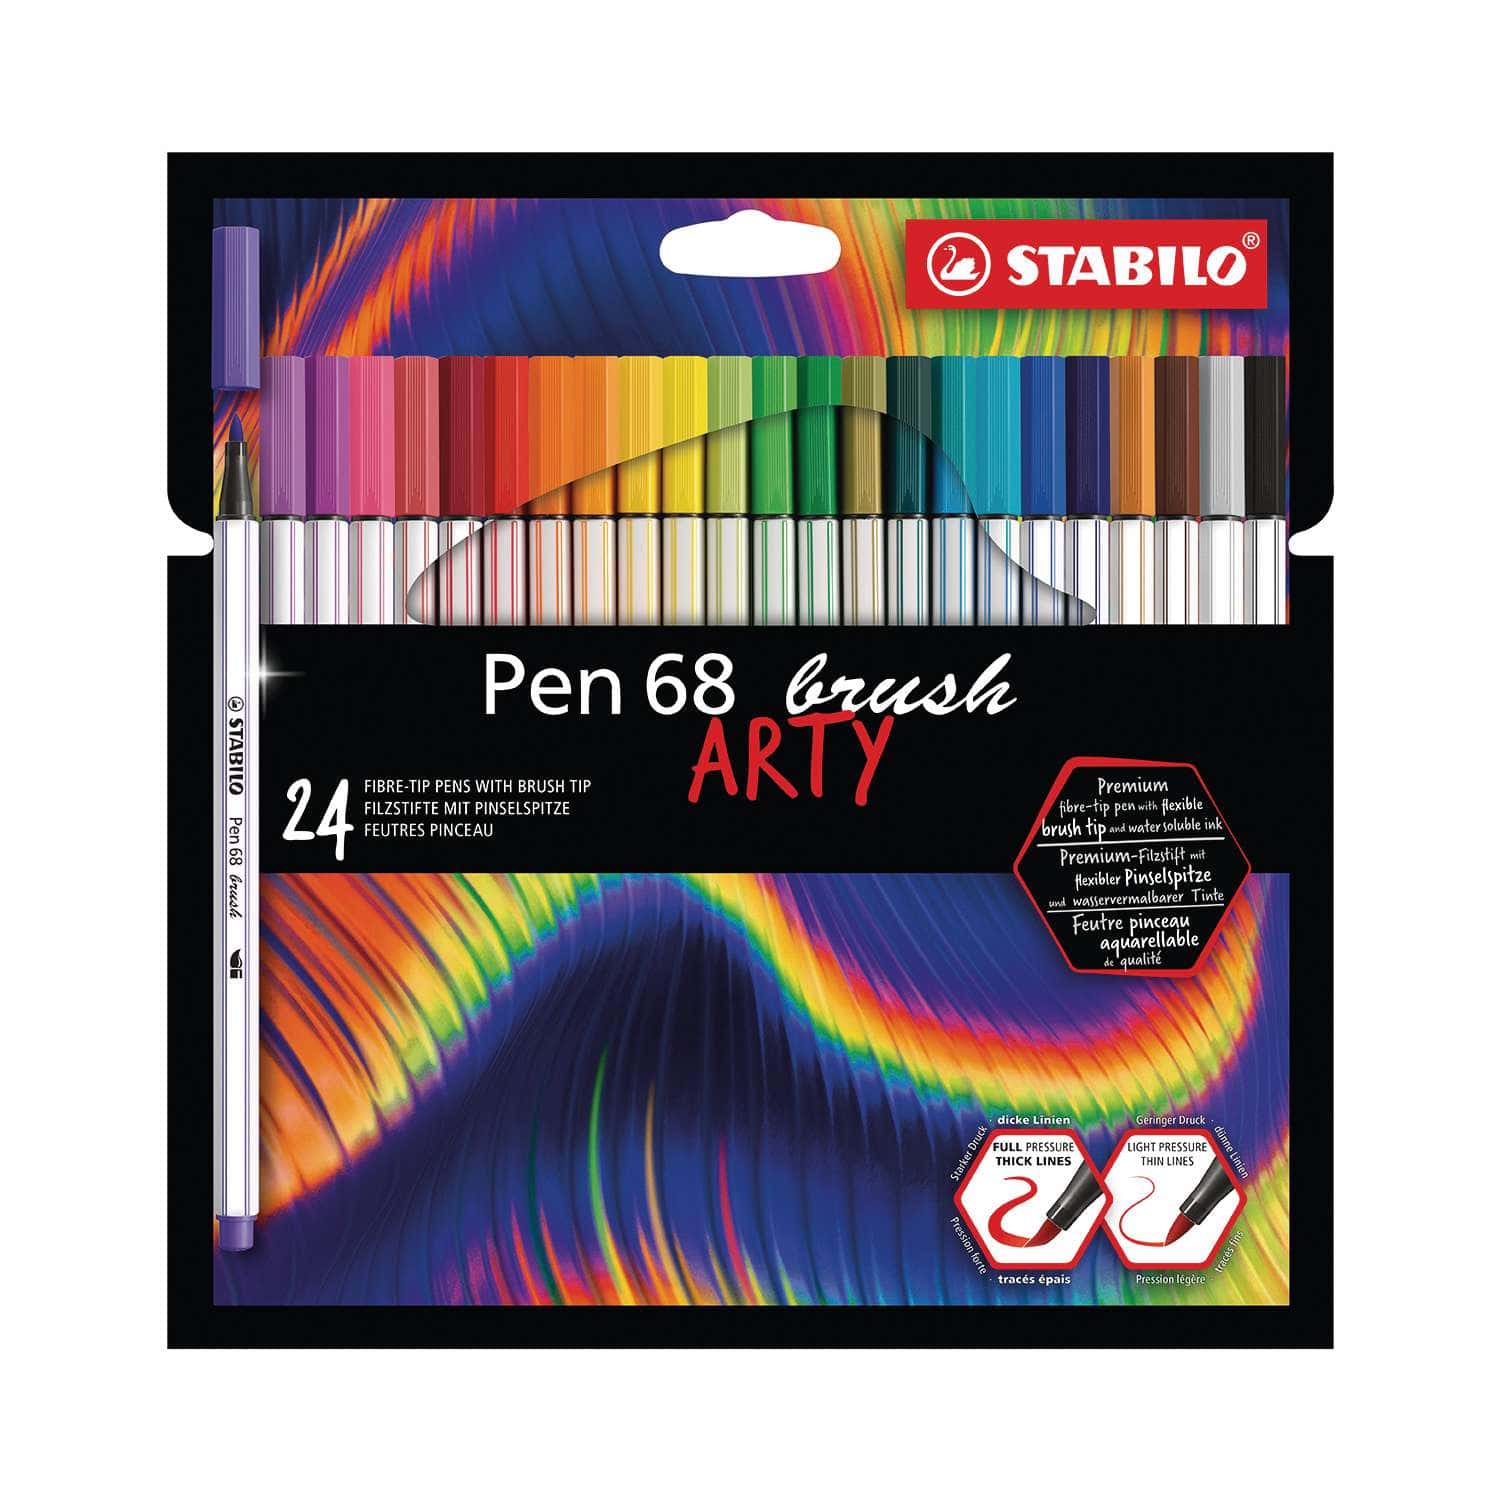 Stabilo Pen 68 Arty Brush Pen Sets, 50,000+ Art Supplies